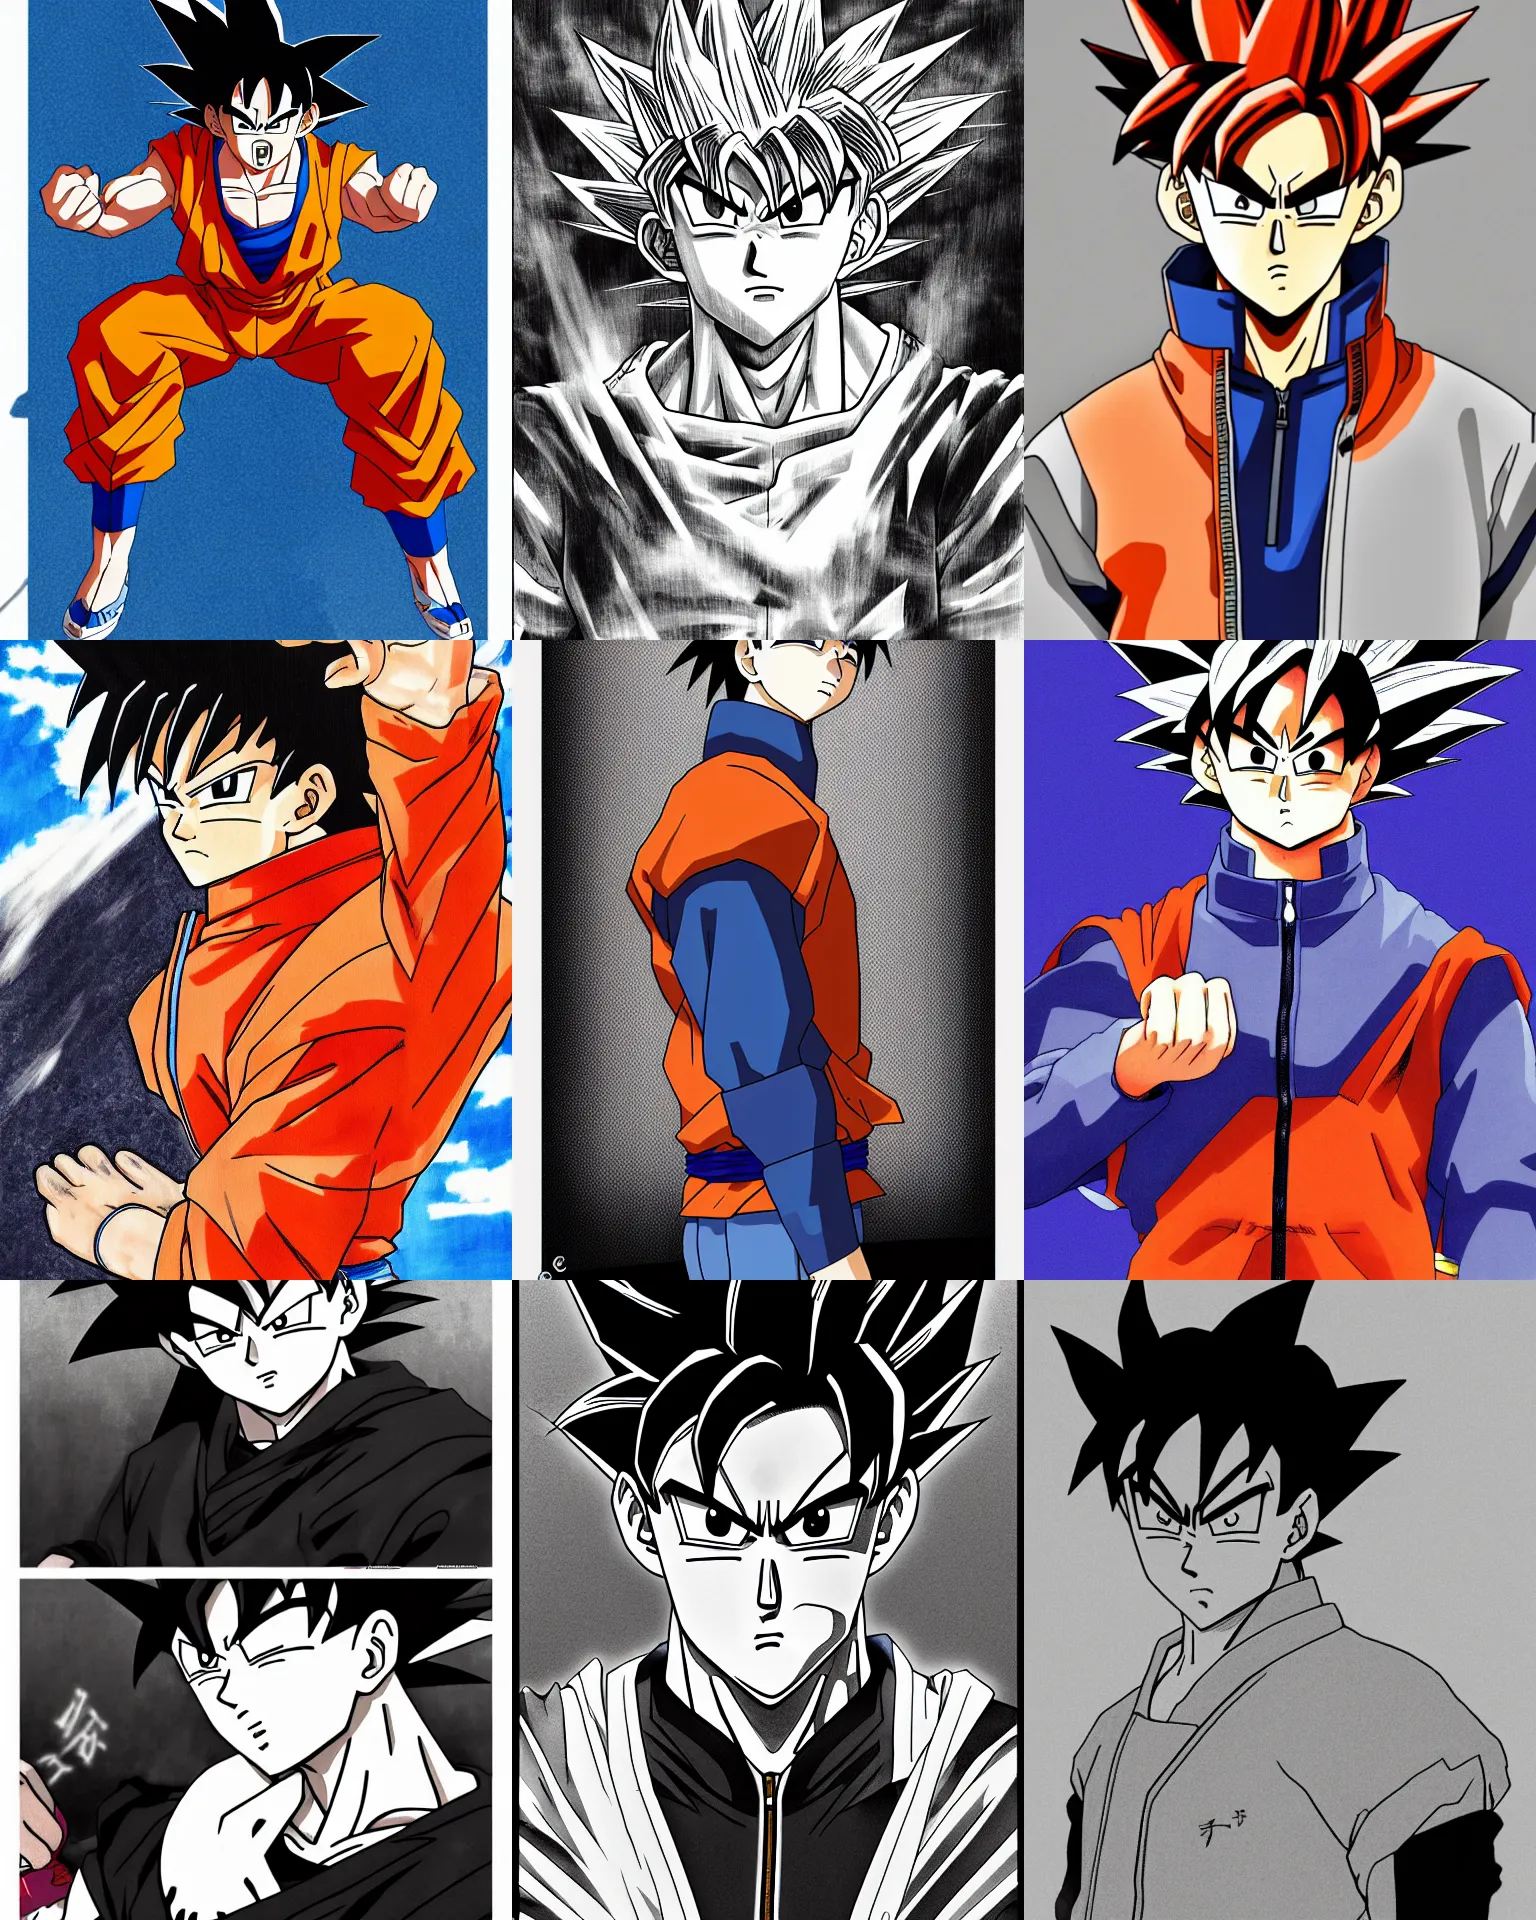 Prompt: A manga portrait of Goku wearing a modern Supreme jacket, by Hayao Miyazaki, trending on ArtStation